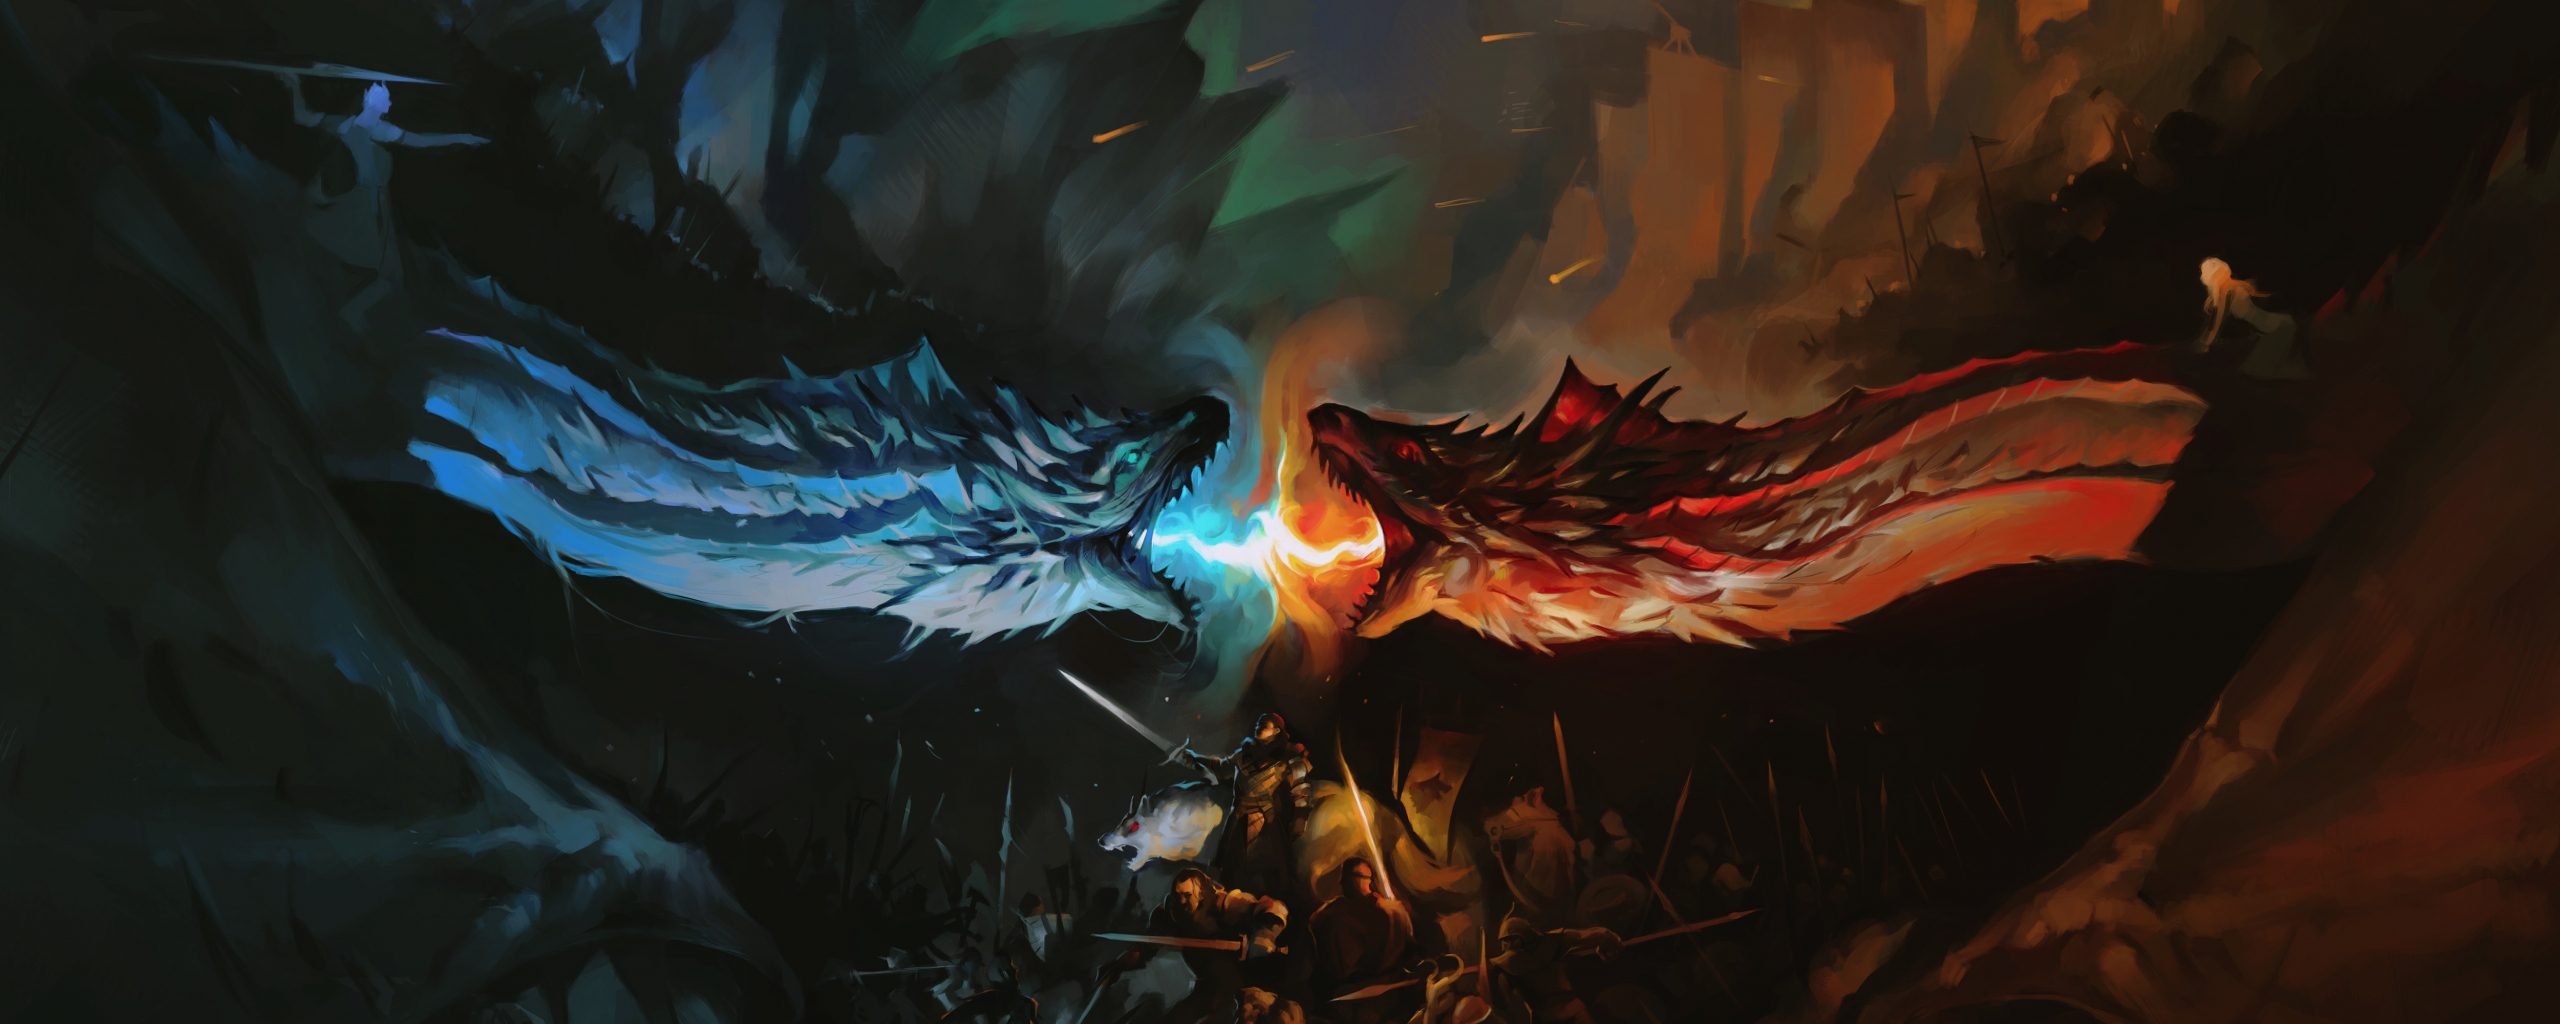 Download 2560x1024 Wallpaper Game Of Thrones Tv Series Dragons